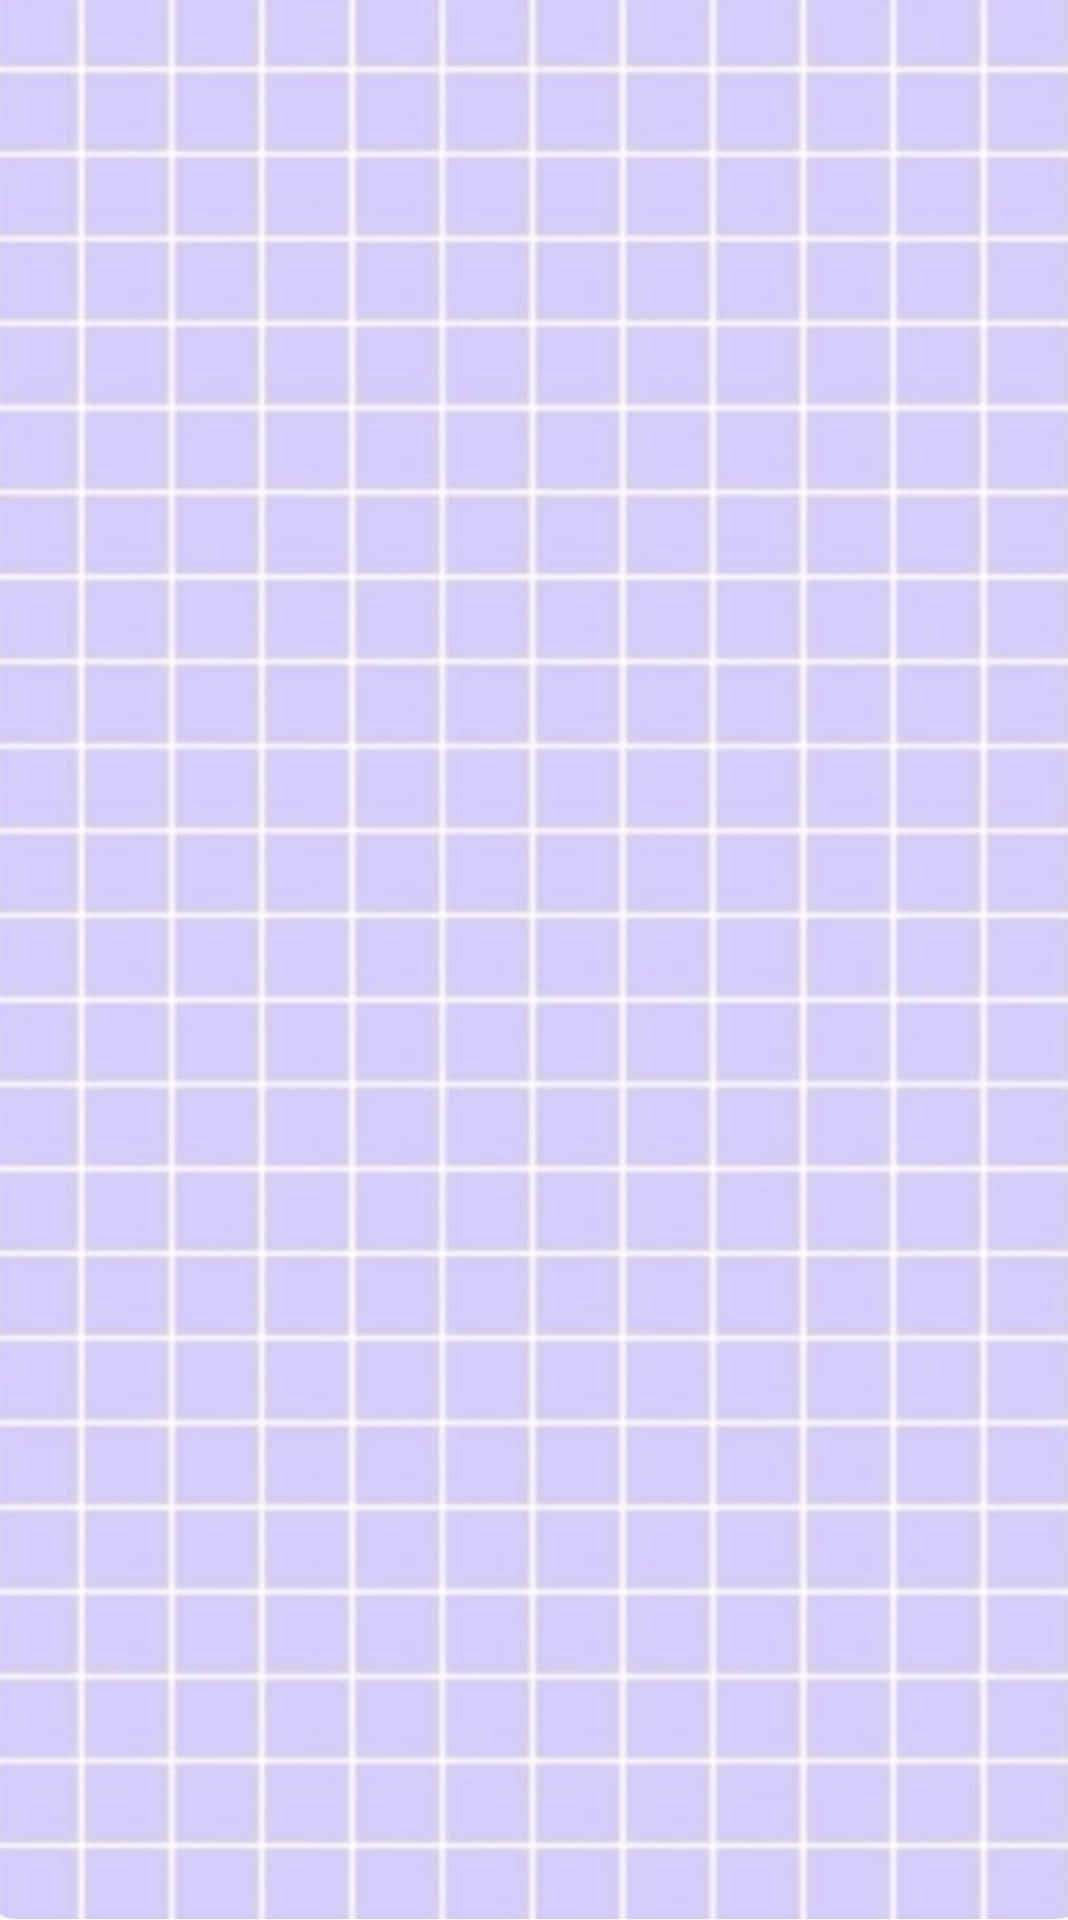 Opgradér din mobiltelefon med et Purple Pastel Iphone Wallpaper. Wallpaper